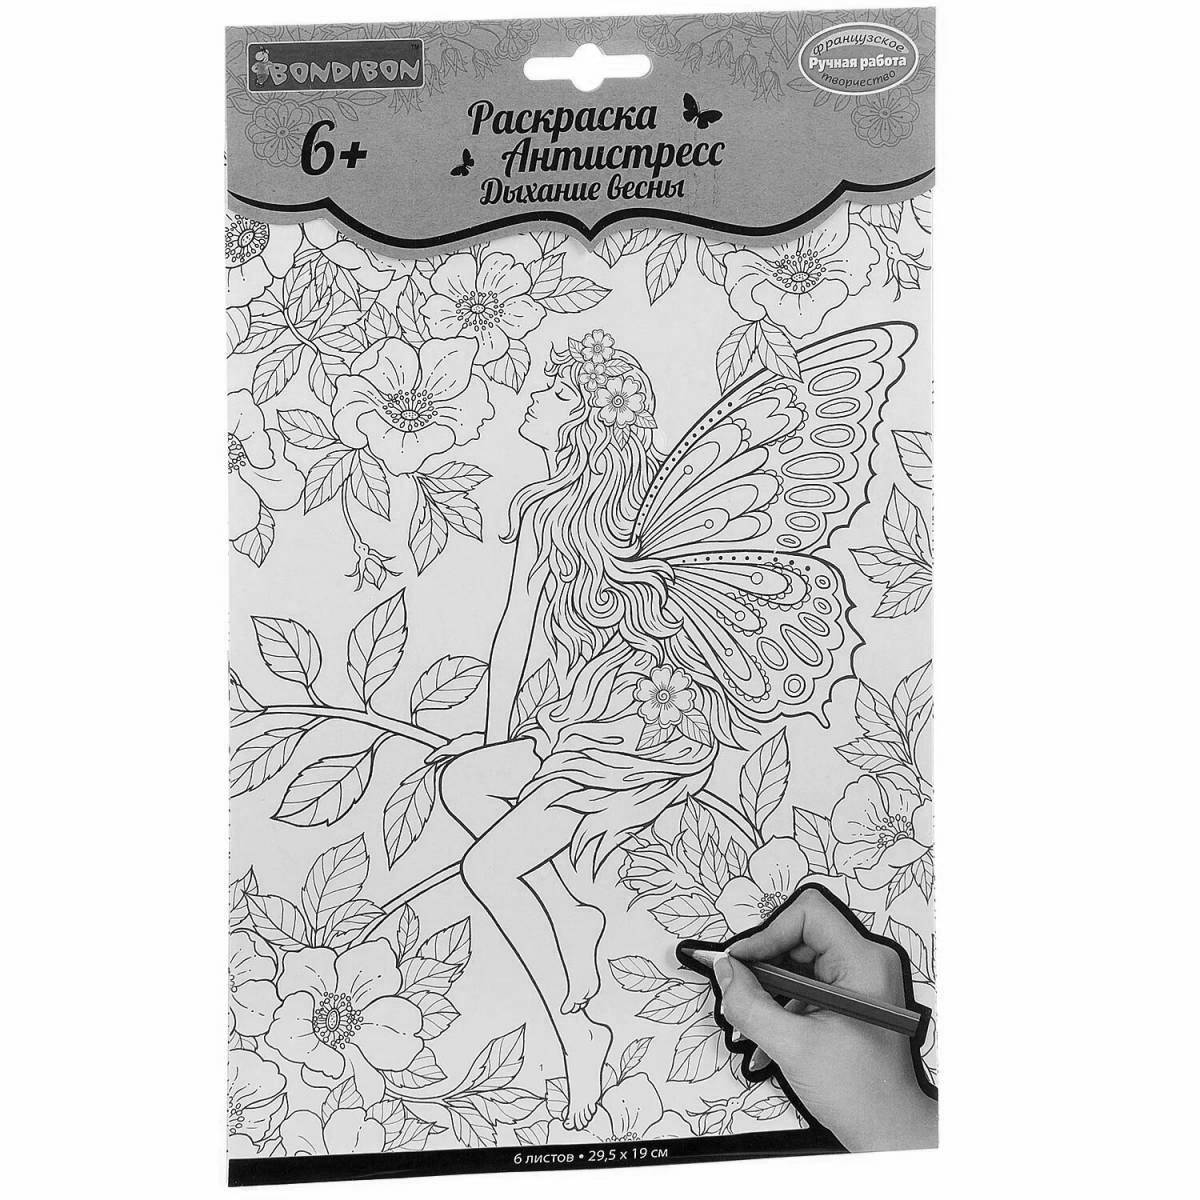 Harmonious spring anti-stress coloring book